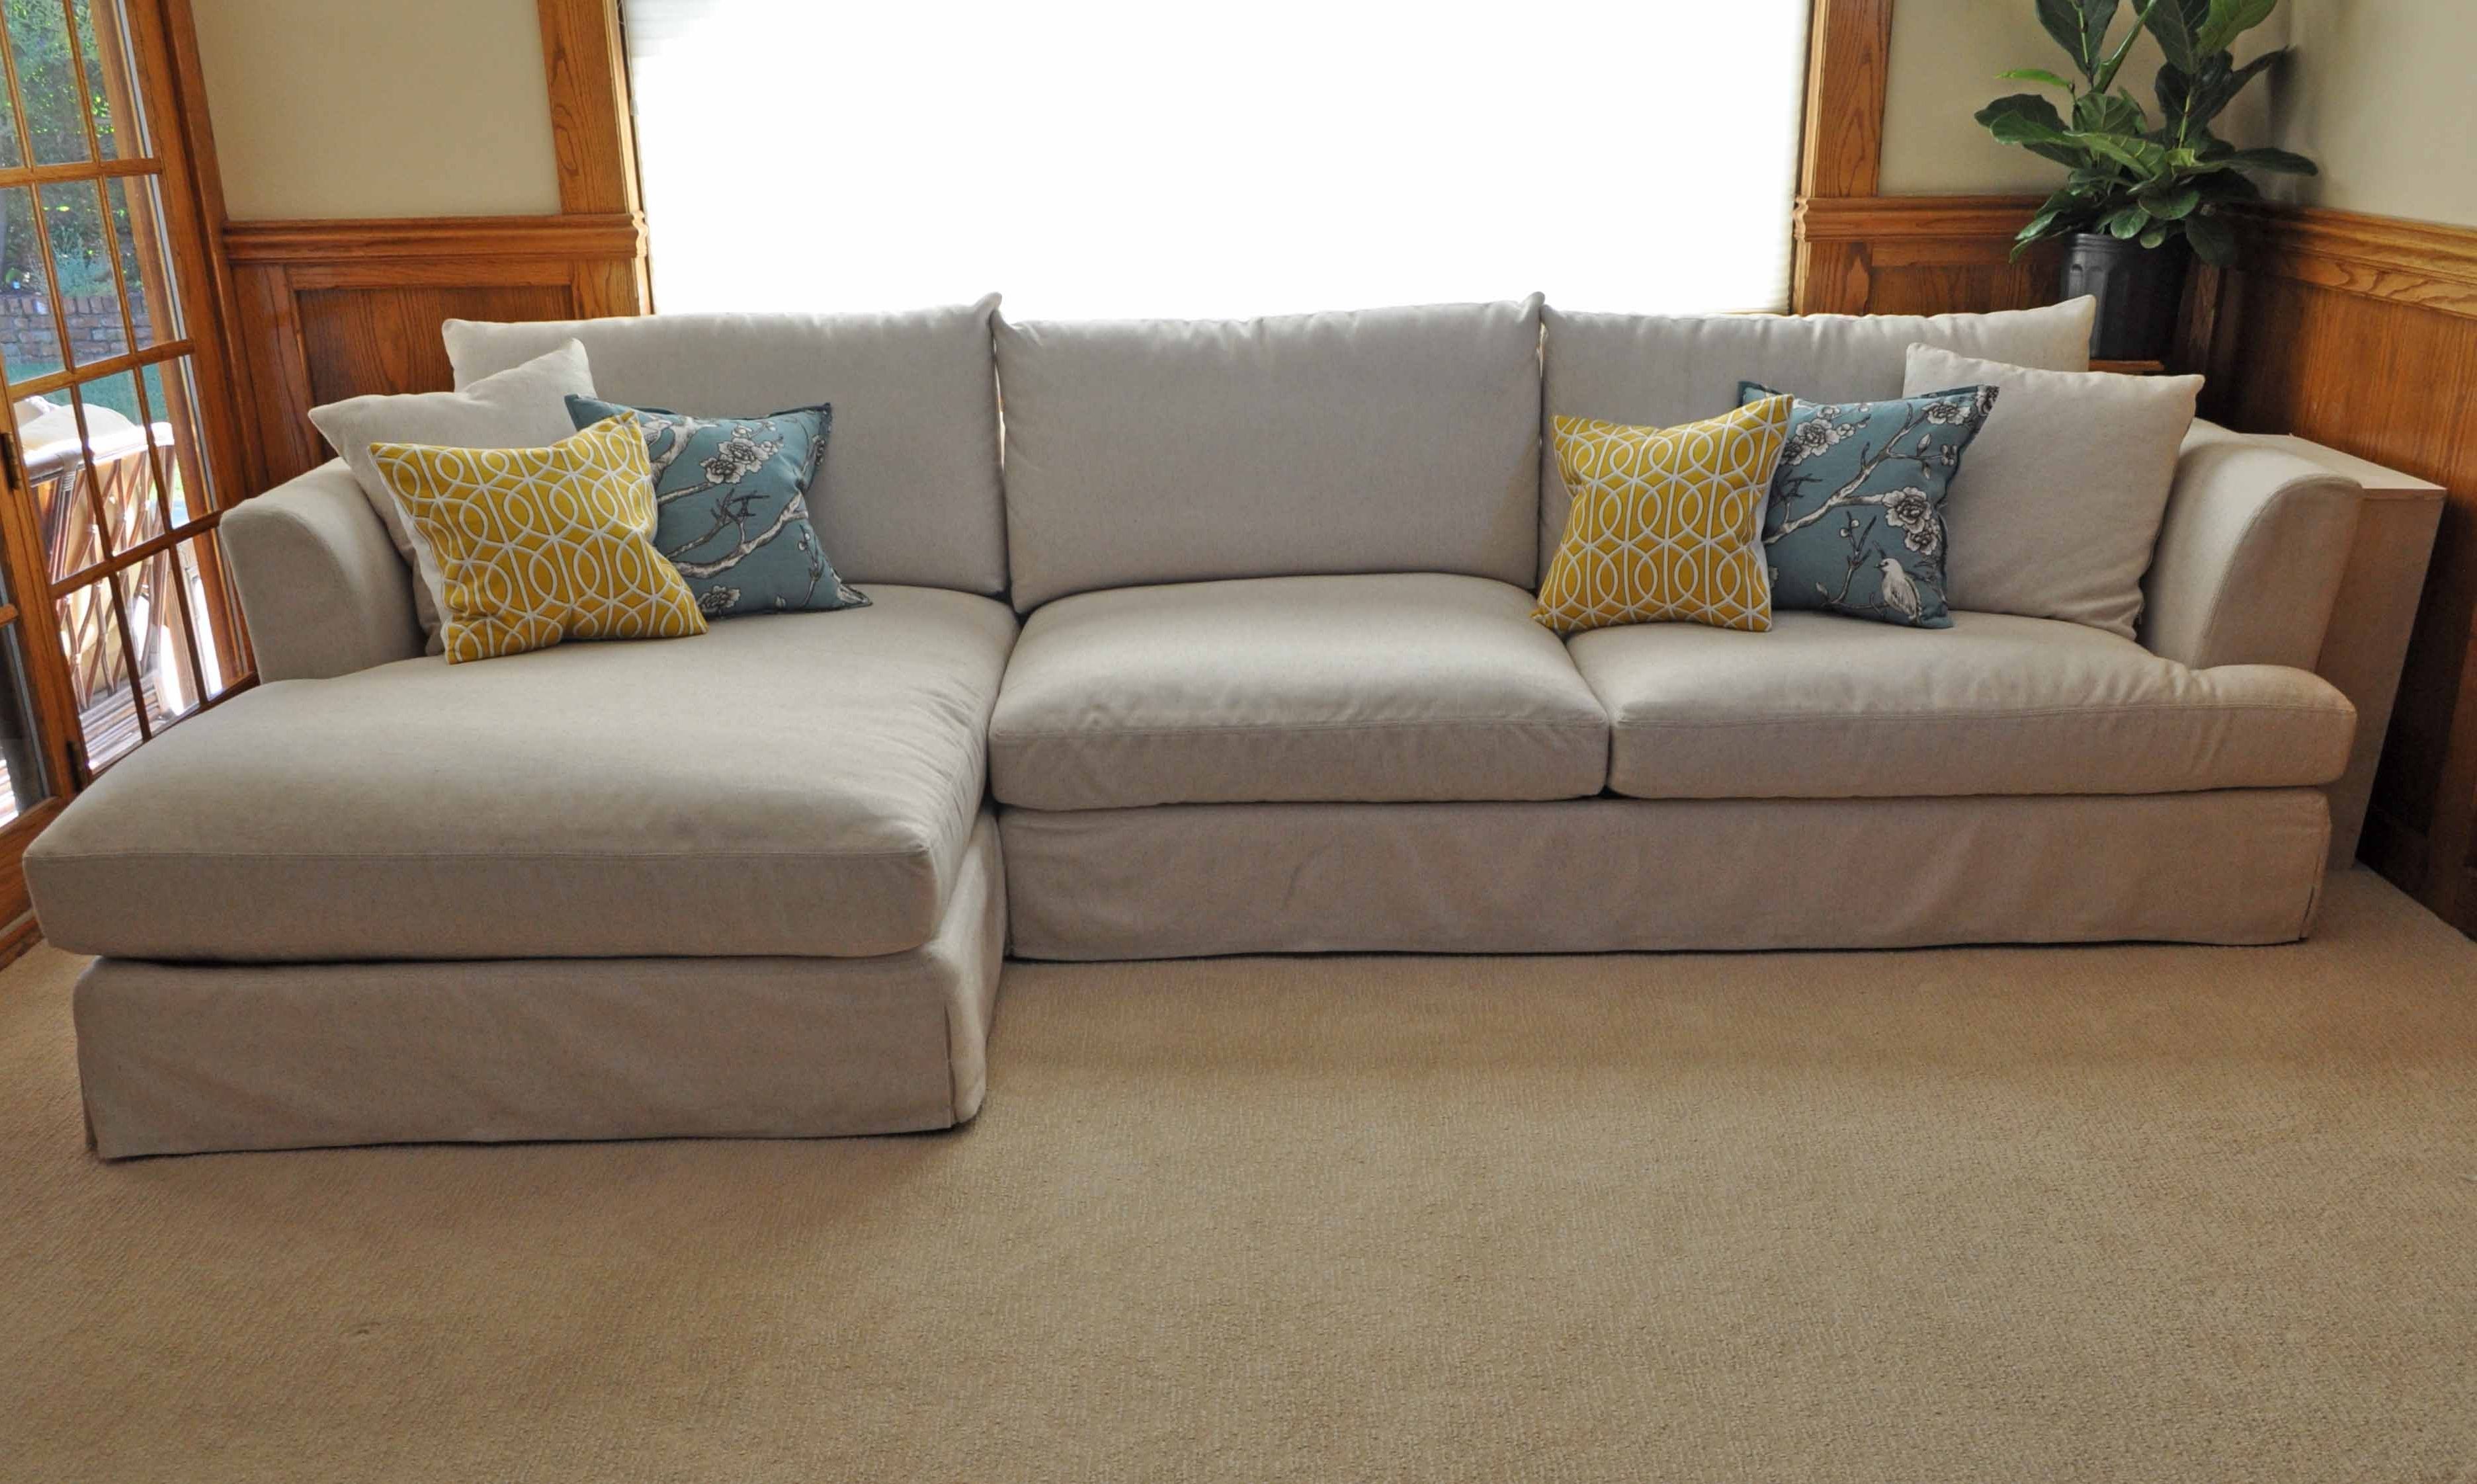 Sleeper Sofa : Comfy Cream Sofa Beige Couch Decor Cream Leather With Latest Cream Colored Sofas (Photo 12 of 20)